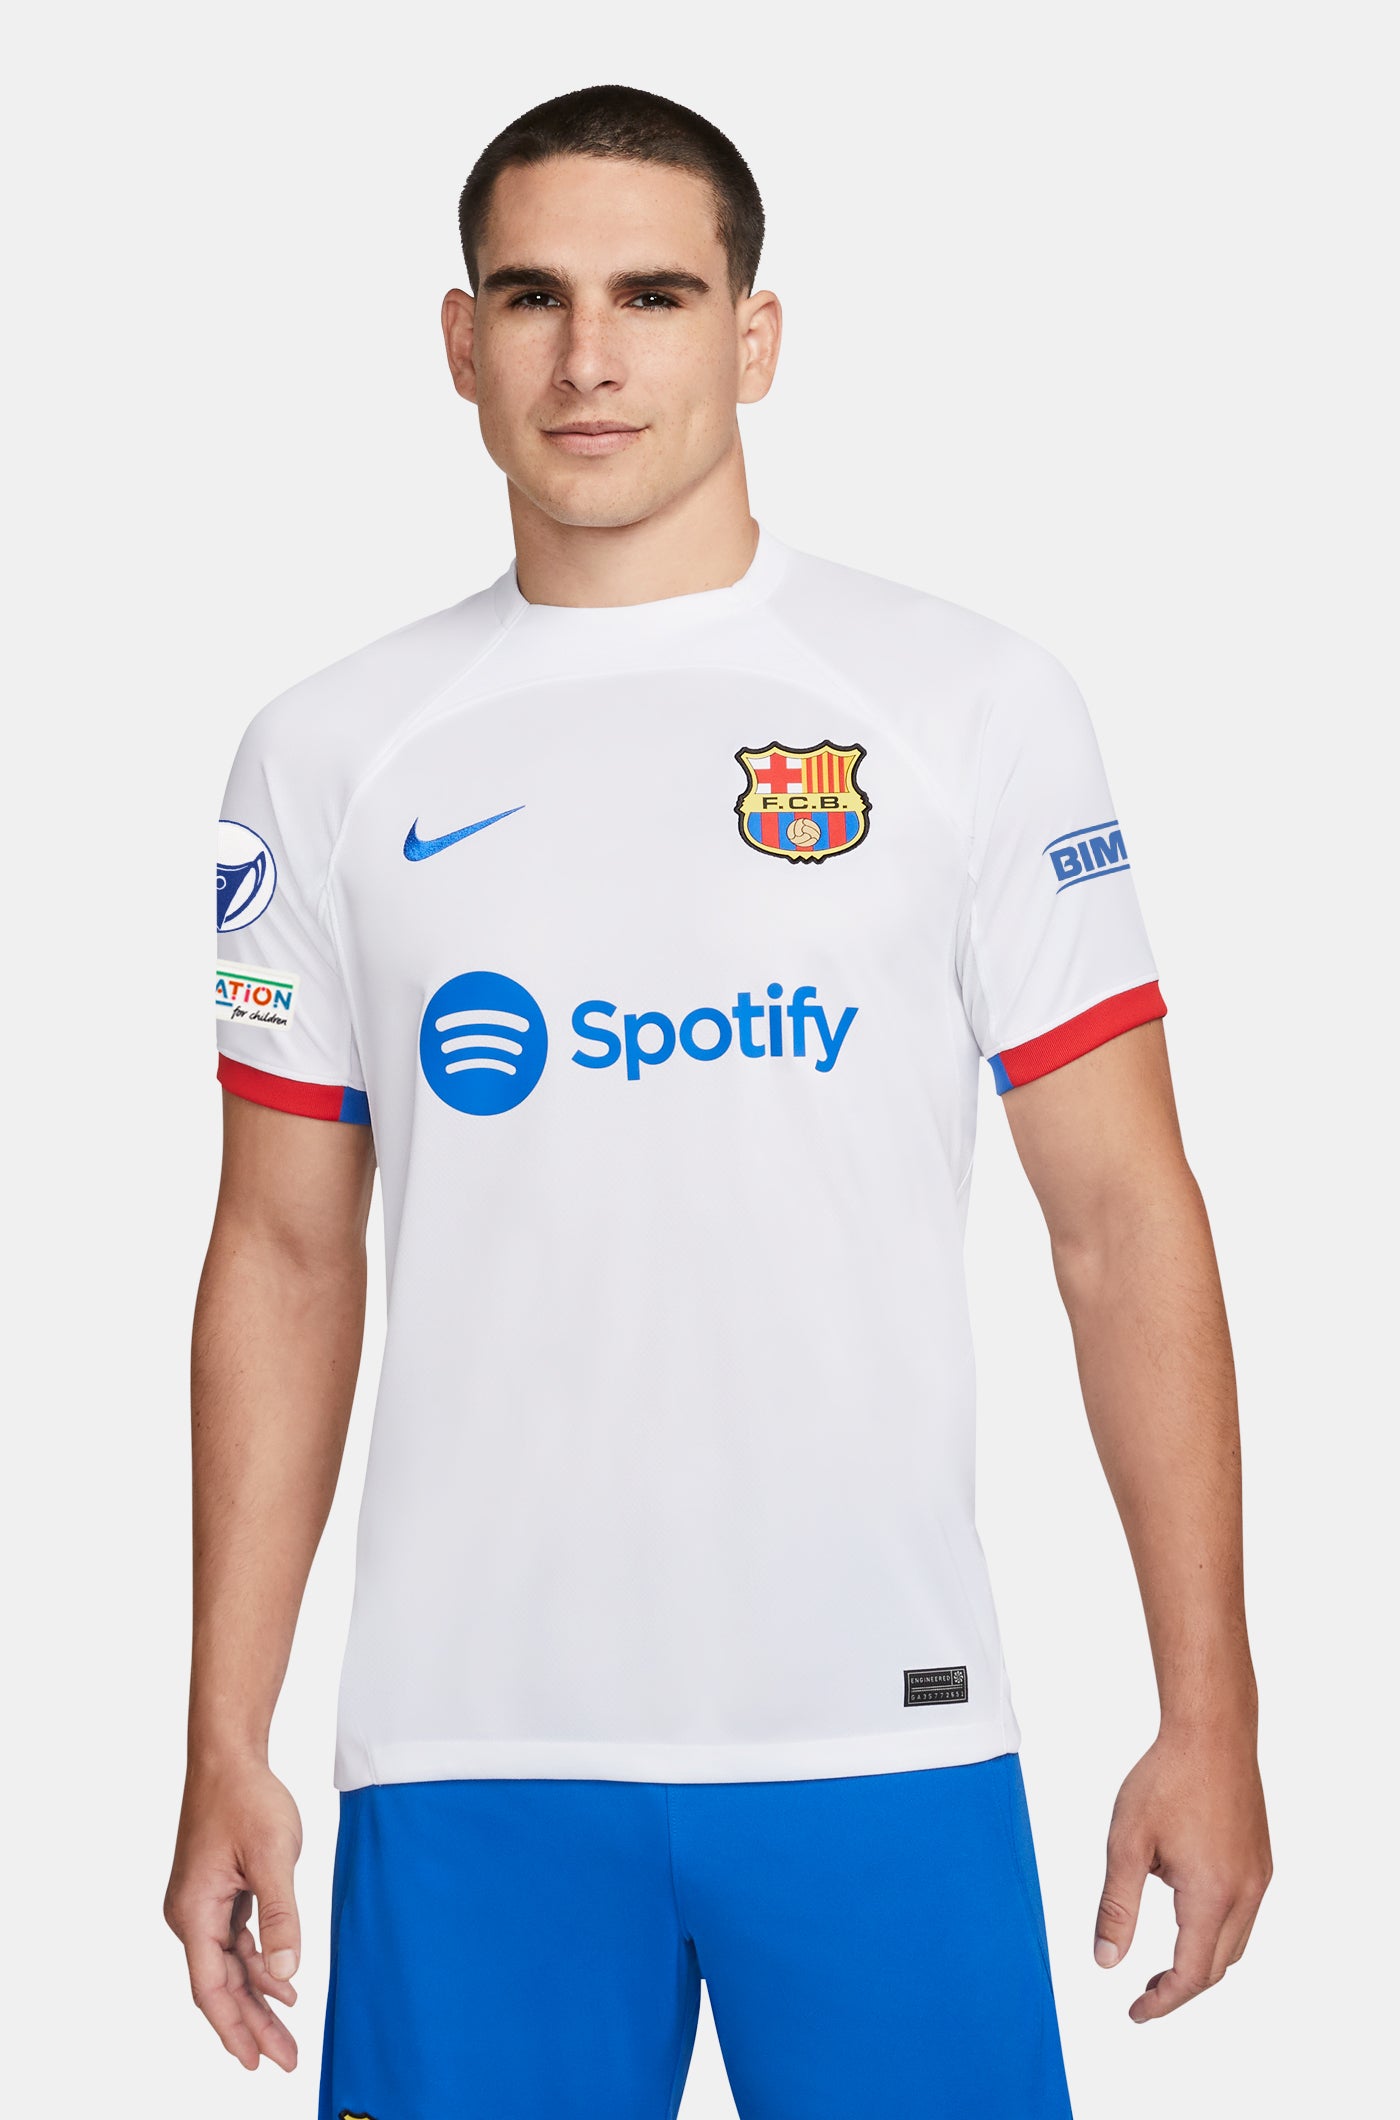 UWCL FC Barcelona away shirt 23/24 – Men - JANA